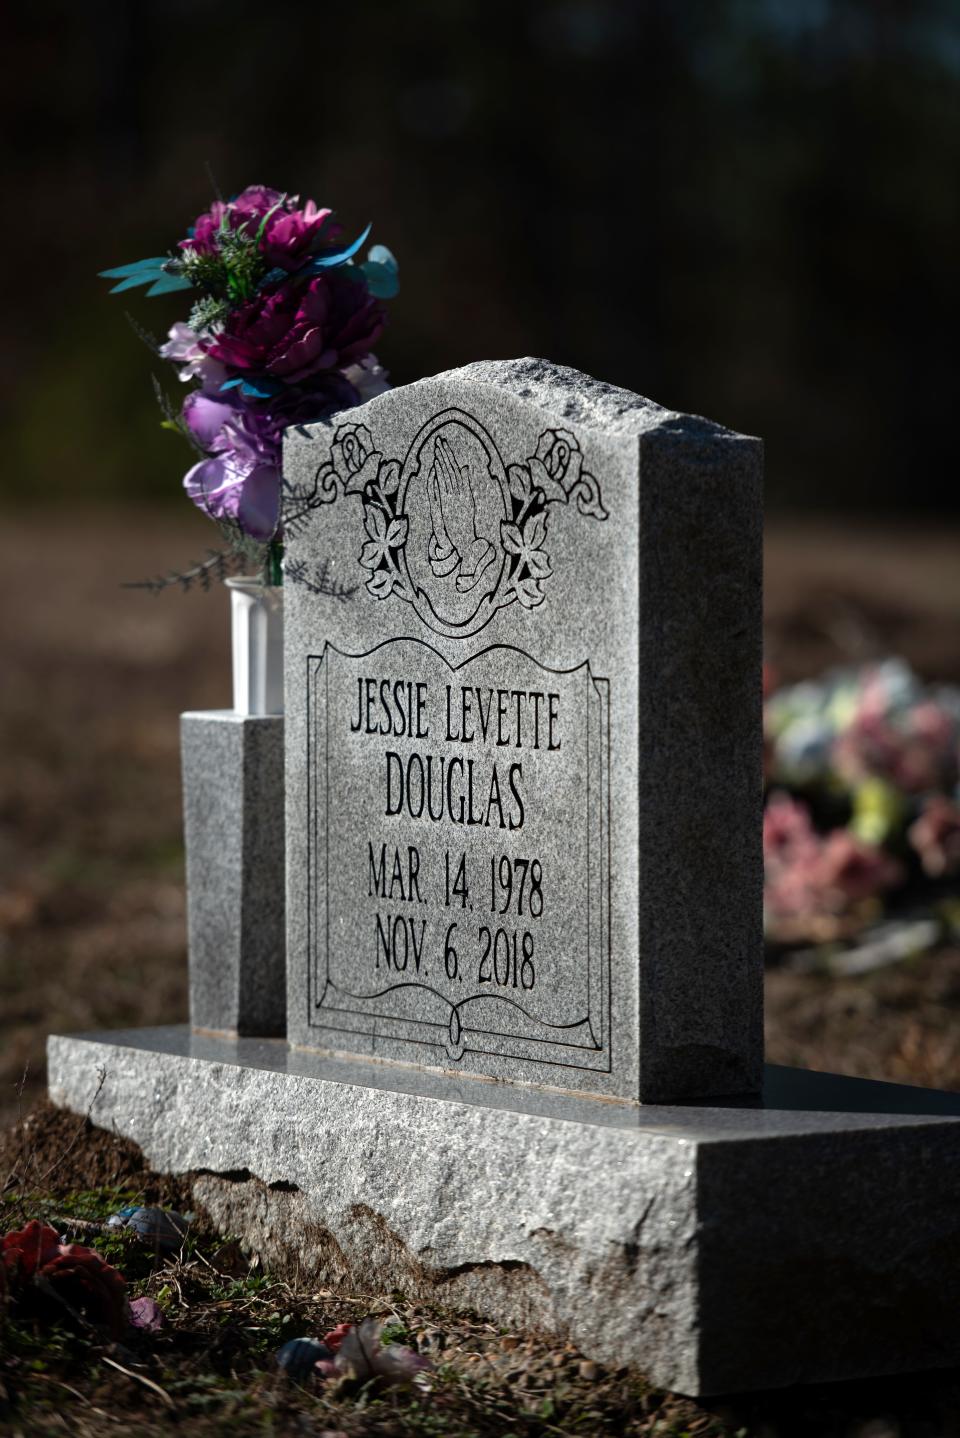 Jessie Levette Douglas, who said she was pressured by Grassaree to lie, died in prison in 2018 of renal failure.